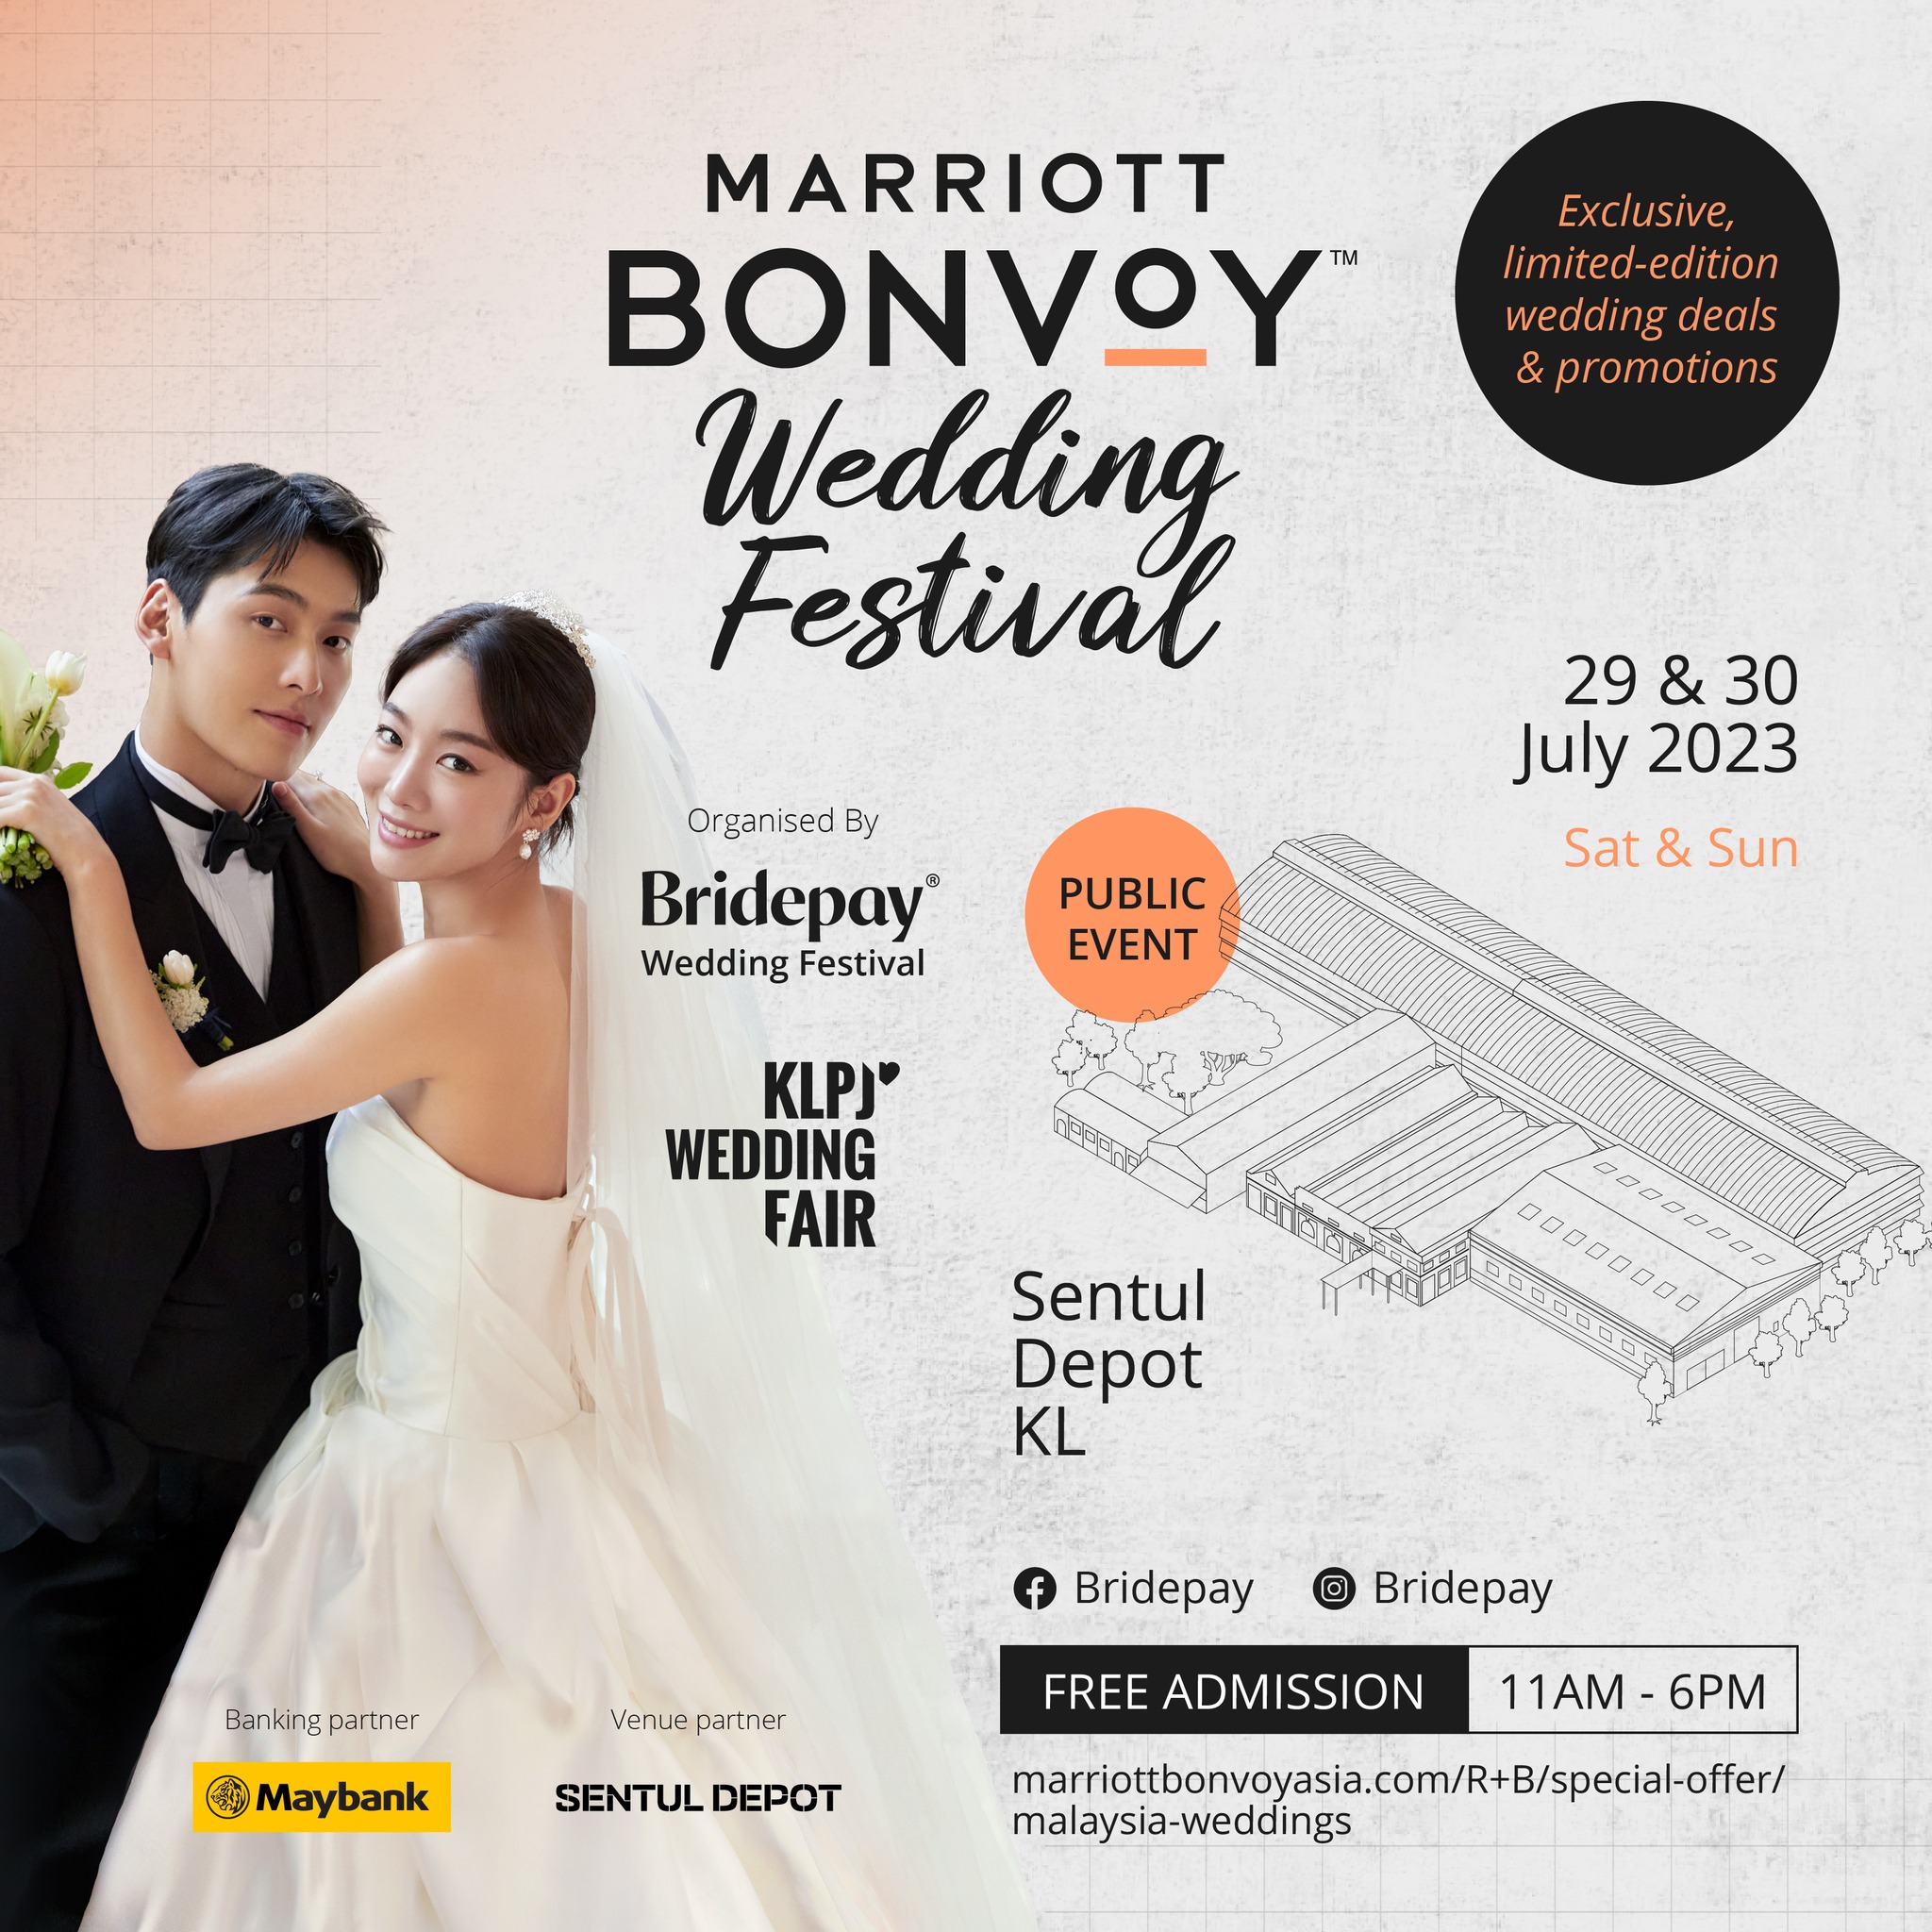 Marriott Bonvoy Wedding Festival showcase at Sentul Depot